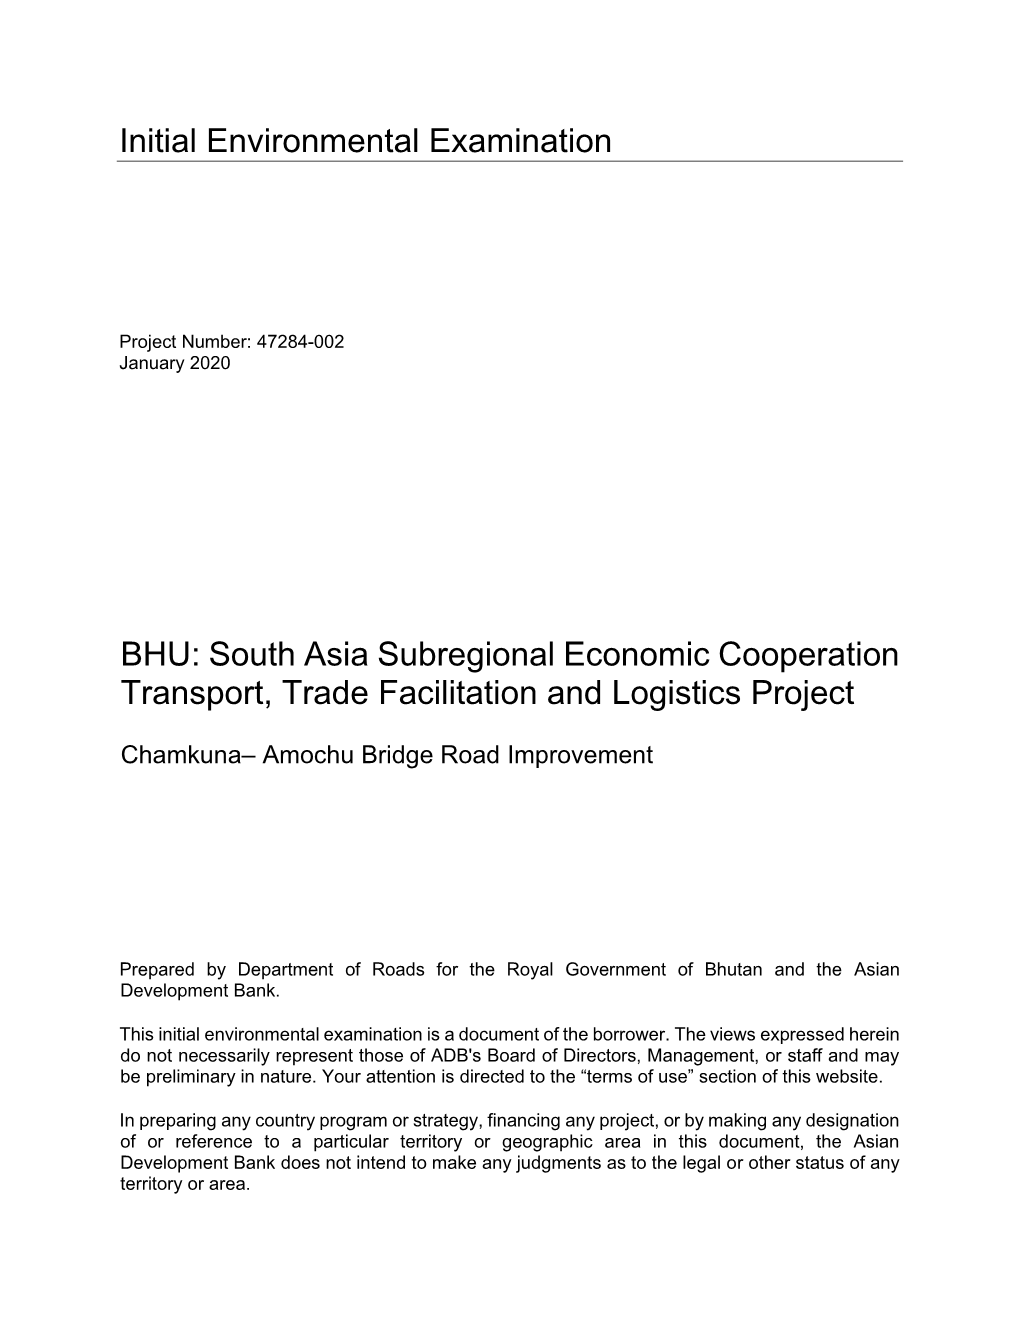 47284-002: South Asia Subregional Economic Cooperation Transport, Trade Facilitation and Logistics Project